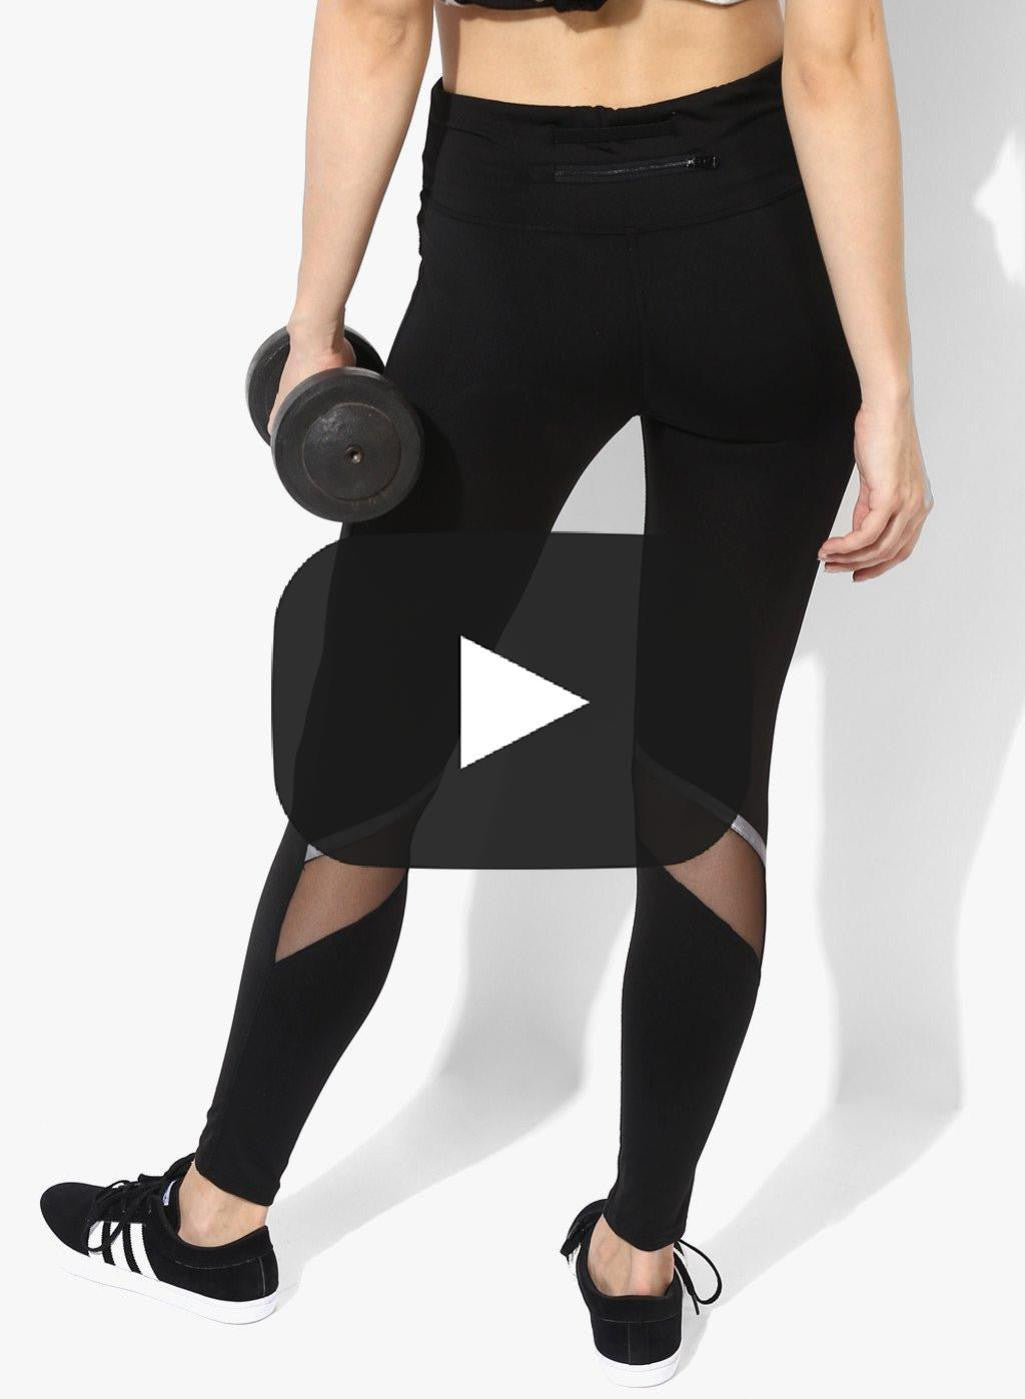 Spiritual Warrior gym Workout active wear Yoga pants Athleisure black leggings gym videos